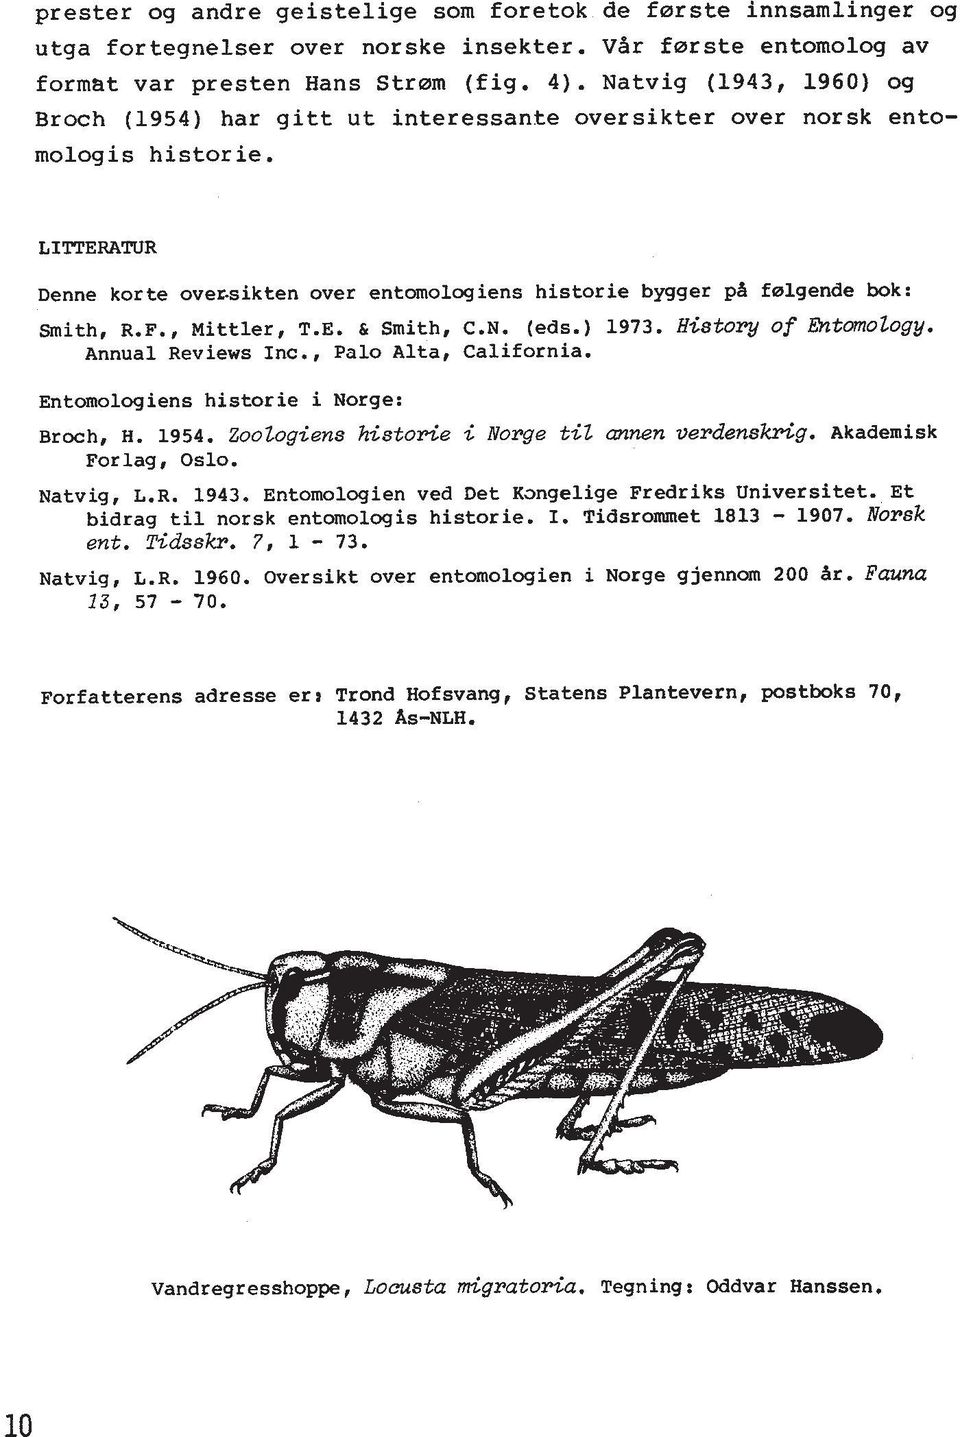 LITTERATUR Denne korte ove~sikten over entomologiens historie bygger pa fralgende bok: Smith, R.F., Mittler, T.E. h Smith, C.N. (eds.) 1973. Histow of Ento~noZogy. Annual Reviews Inc.